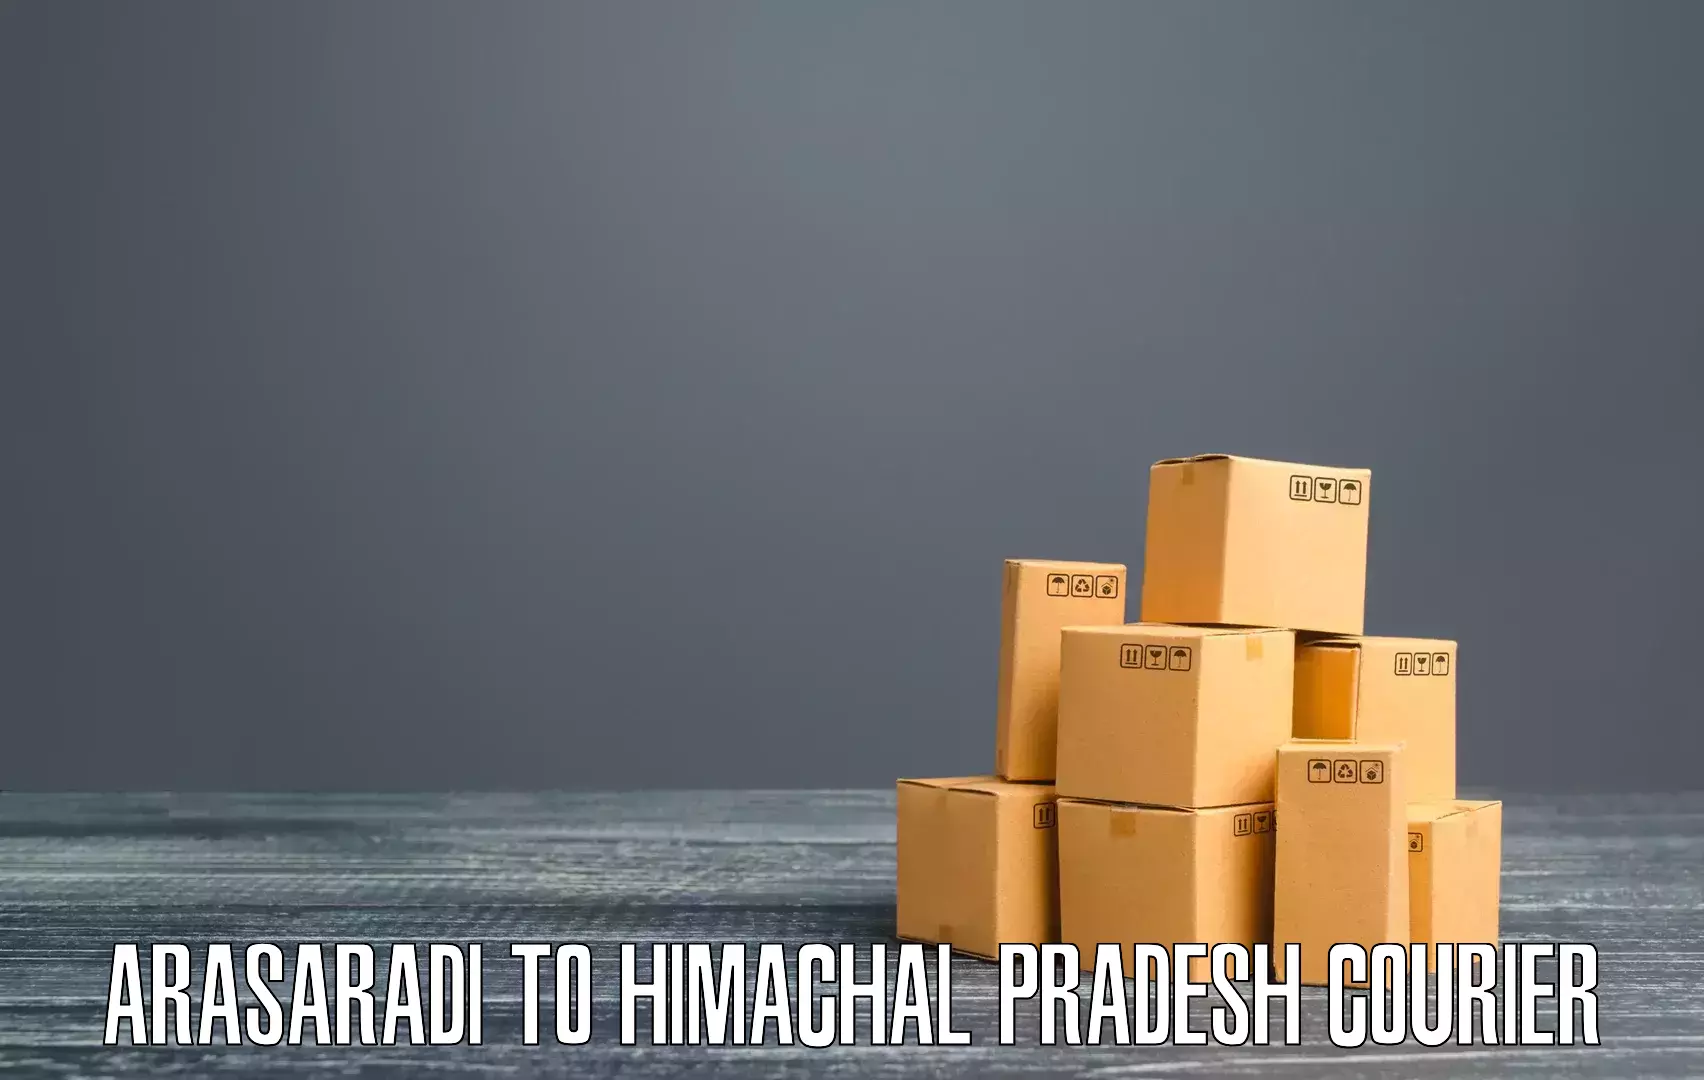 Supply chain efficiency Arasaradi to Himachal Pradesh